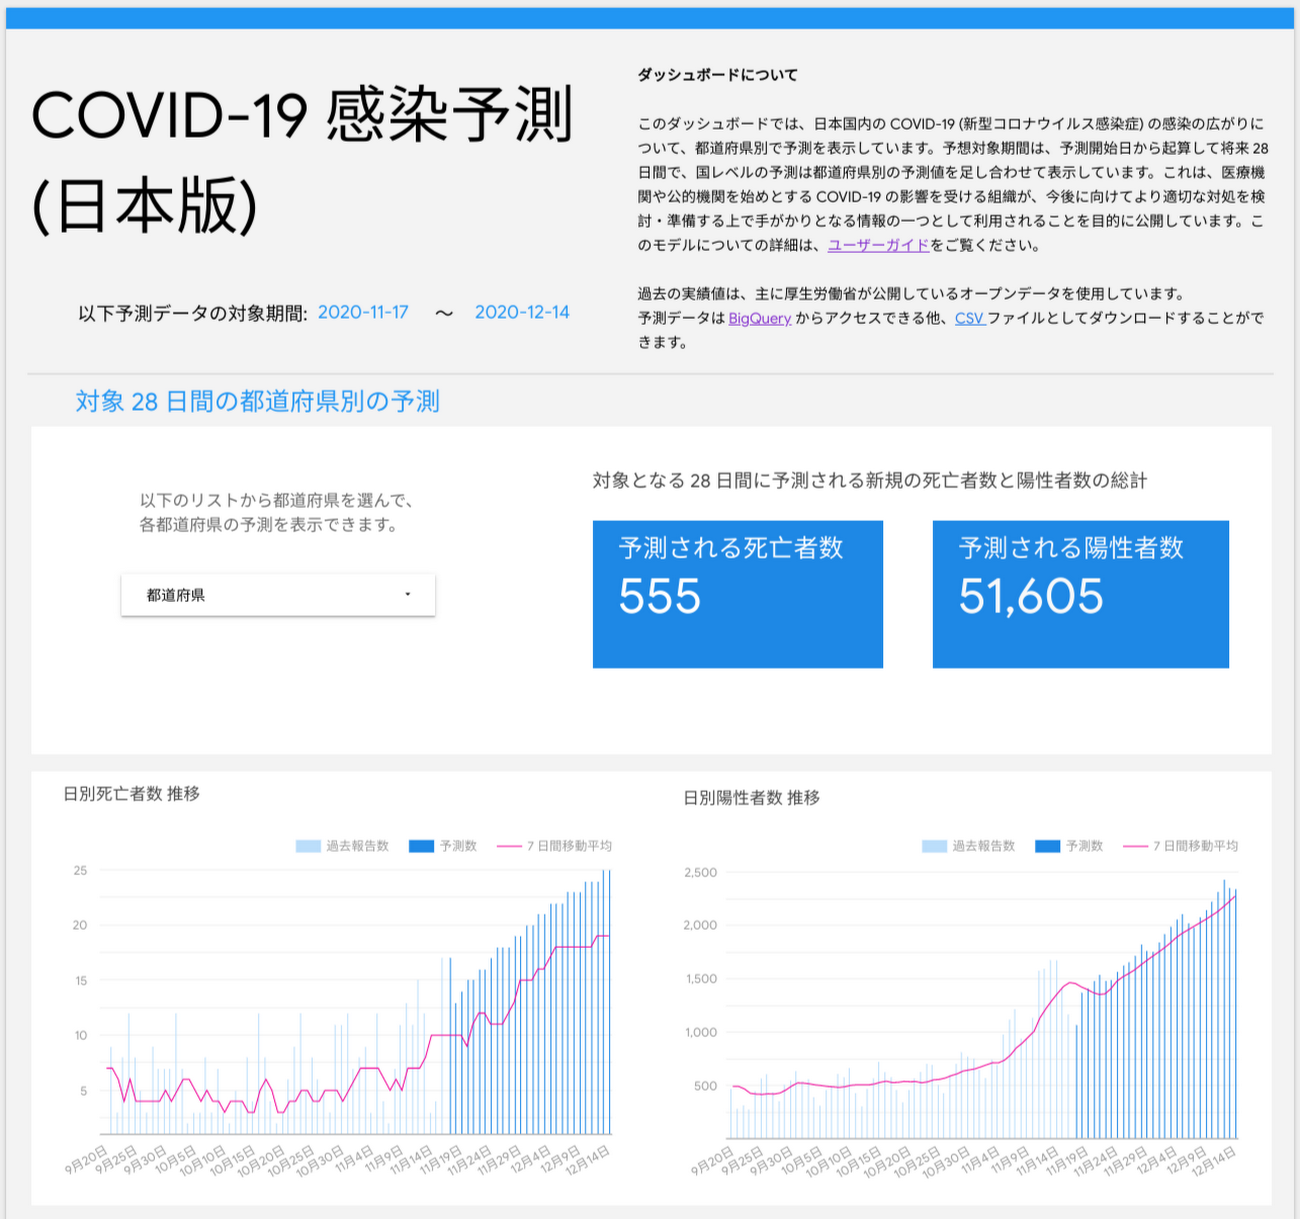 https://storage.googleapis.com/gweb-cloudblog-publish/images/covid-19publicforecasts_jp.max-1300x1300.png